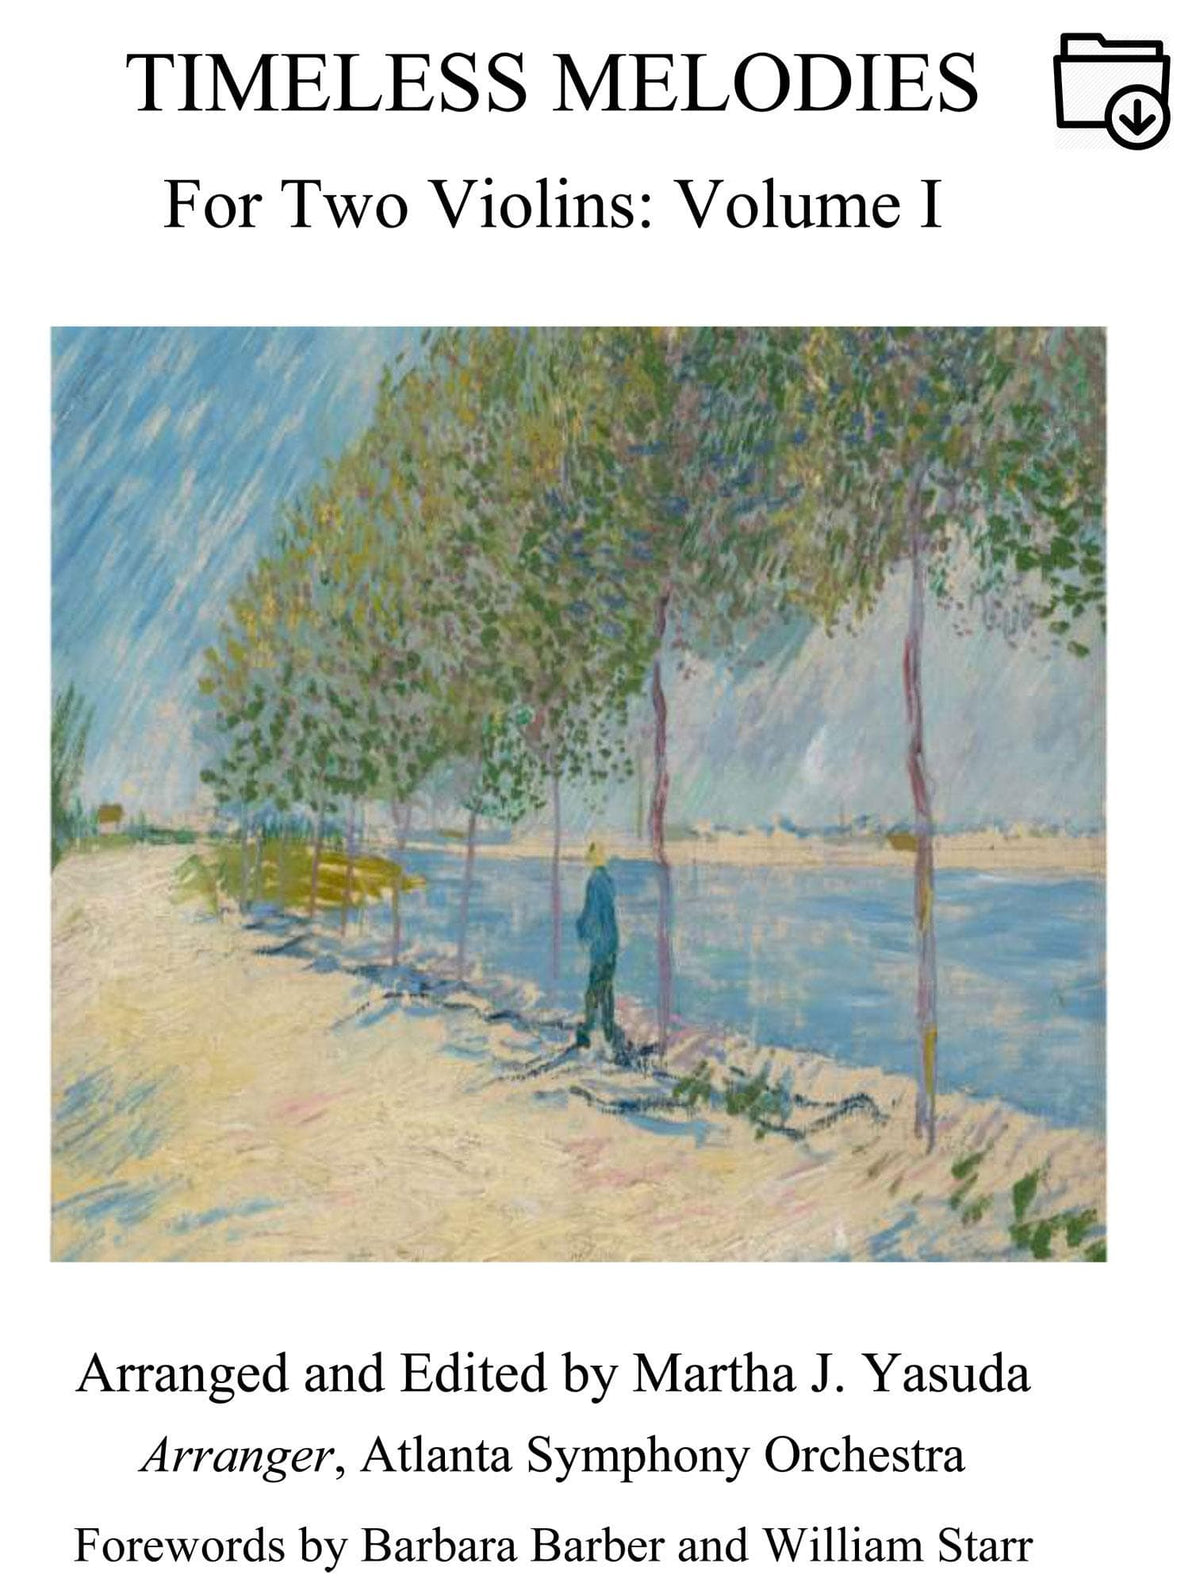 Yasuda, Martha - Timeless Melodies For Two Violins, Volume I - Digital Download